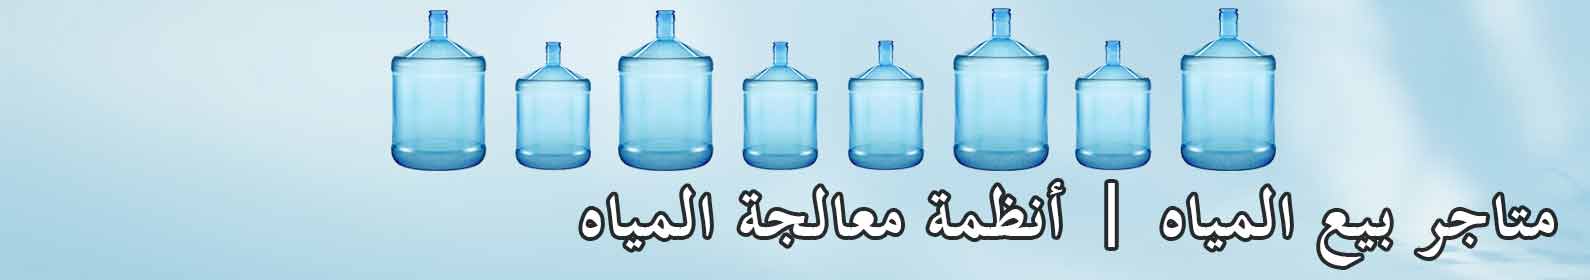 arabic-water-stores.jpg